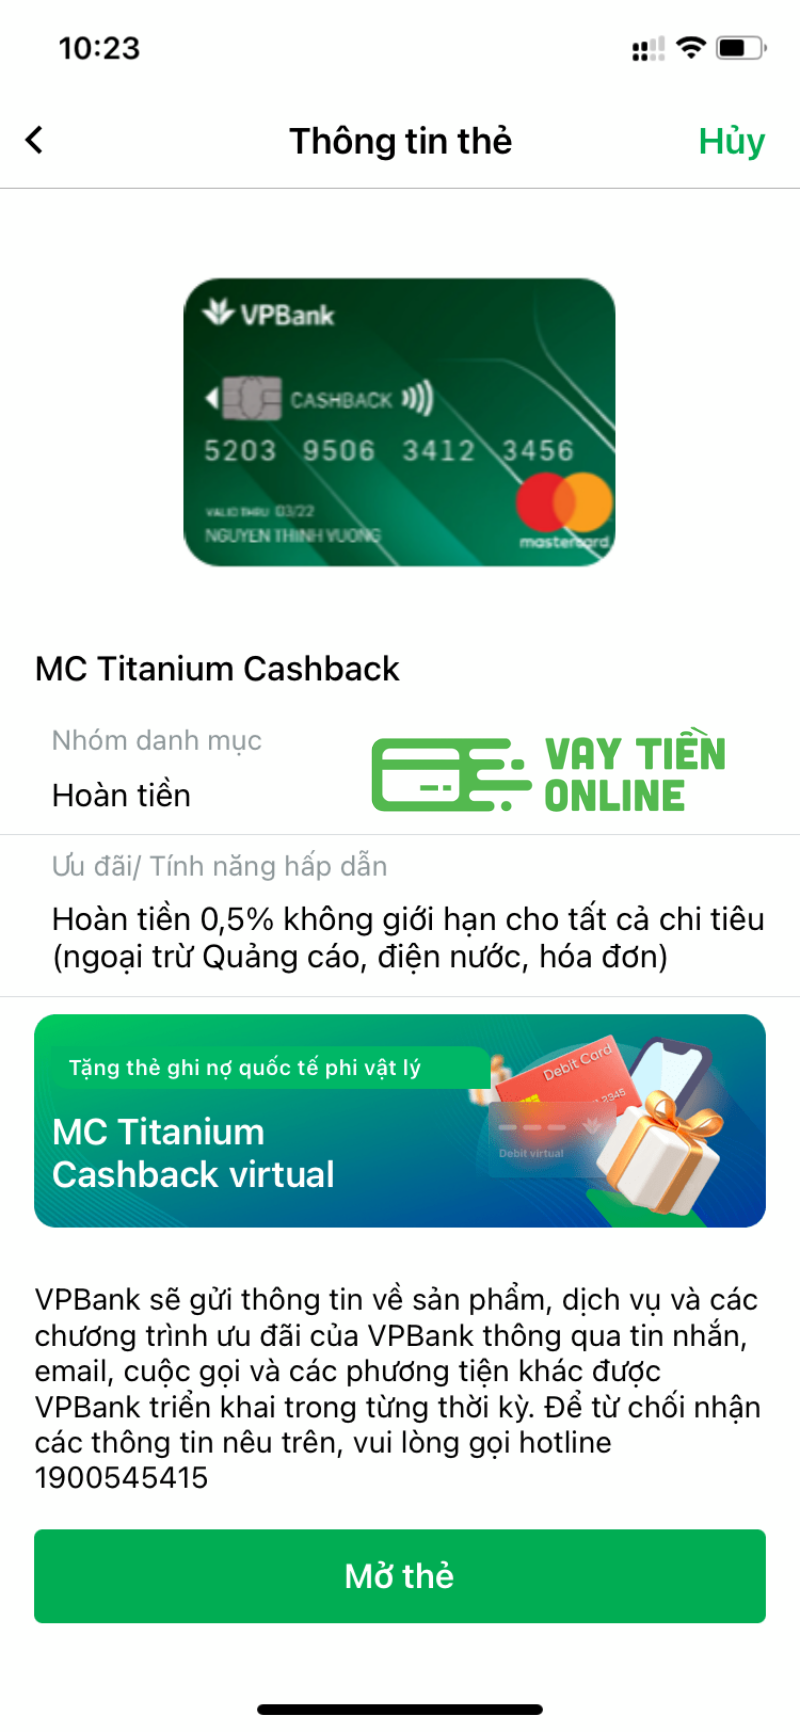 Mo the VPBank online qua app 5 1